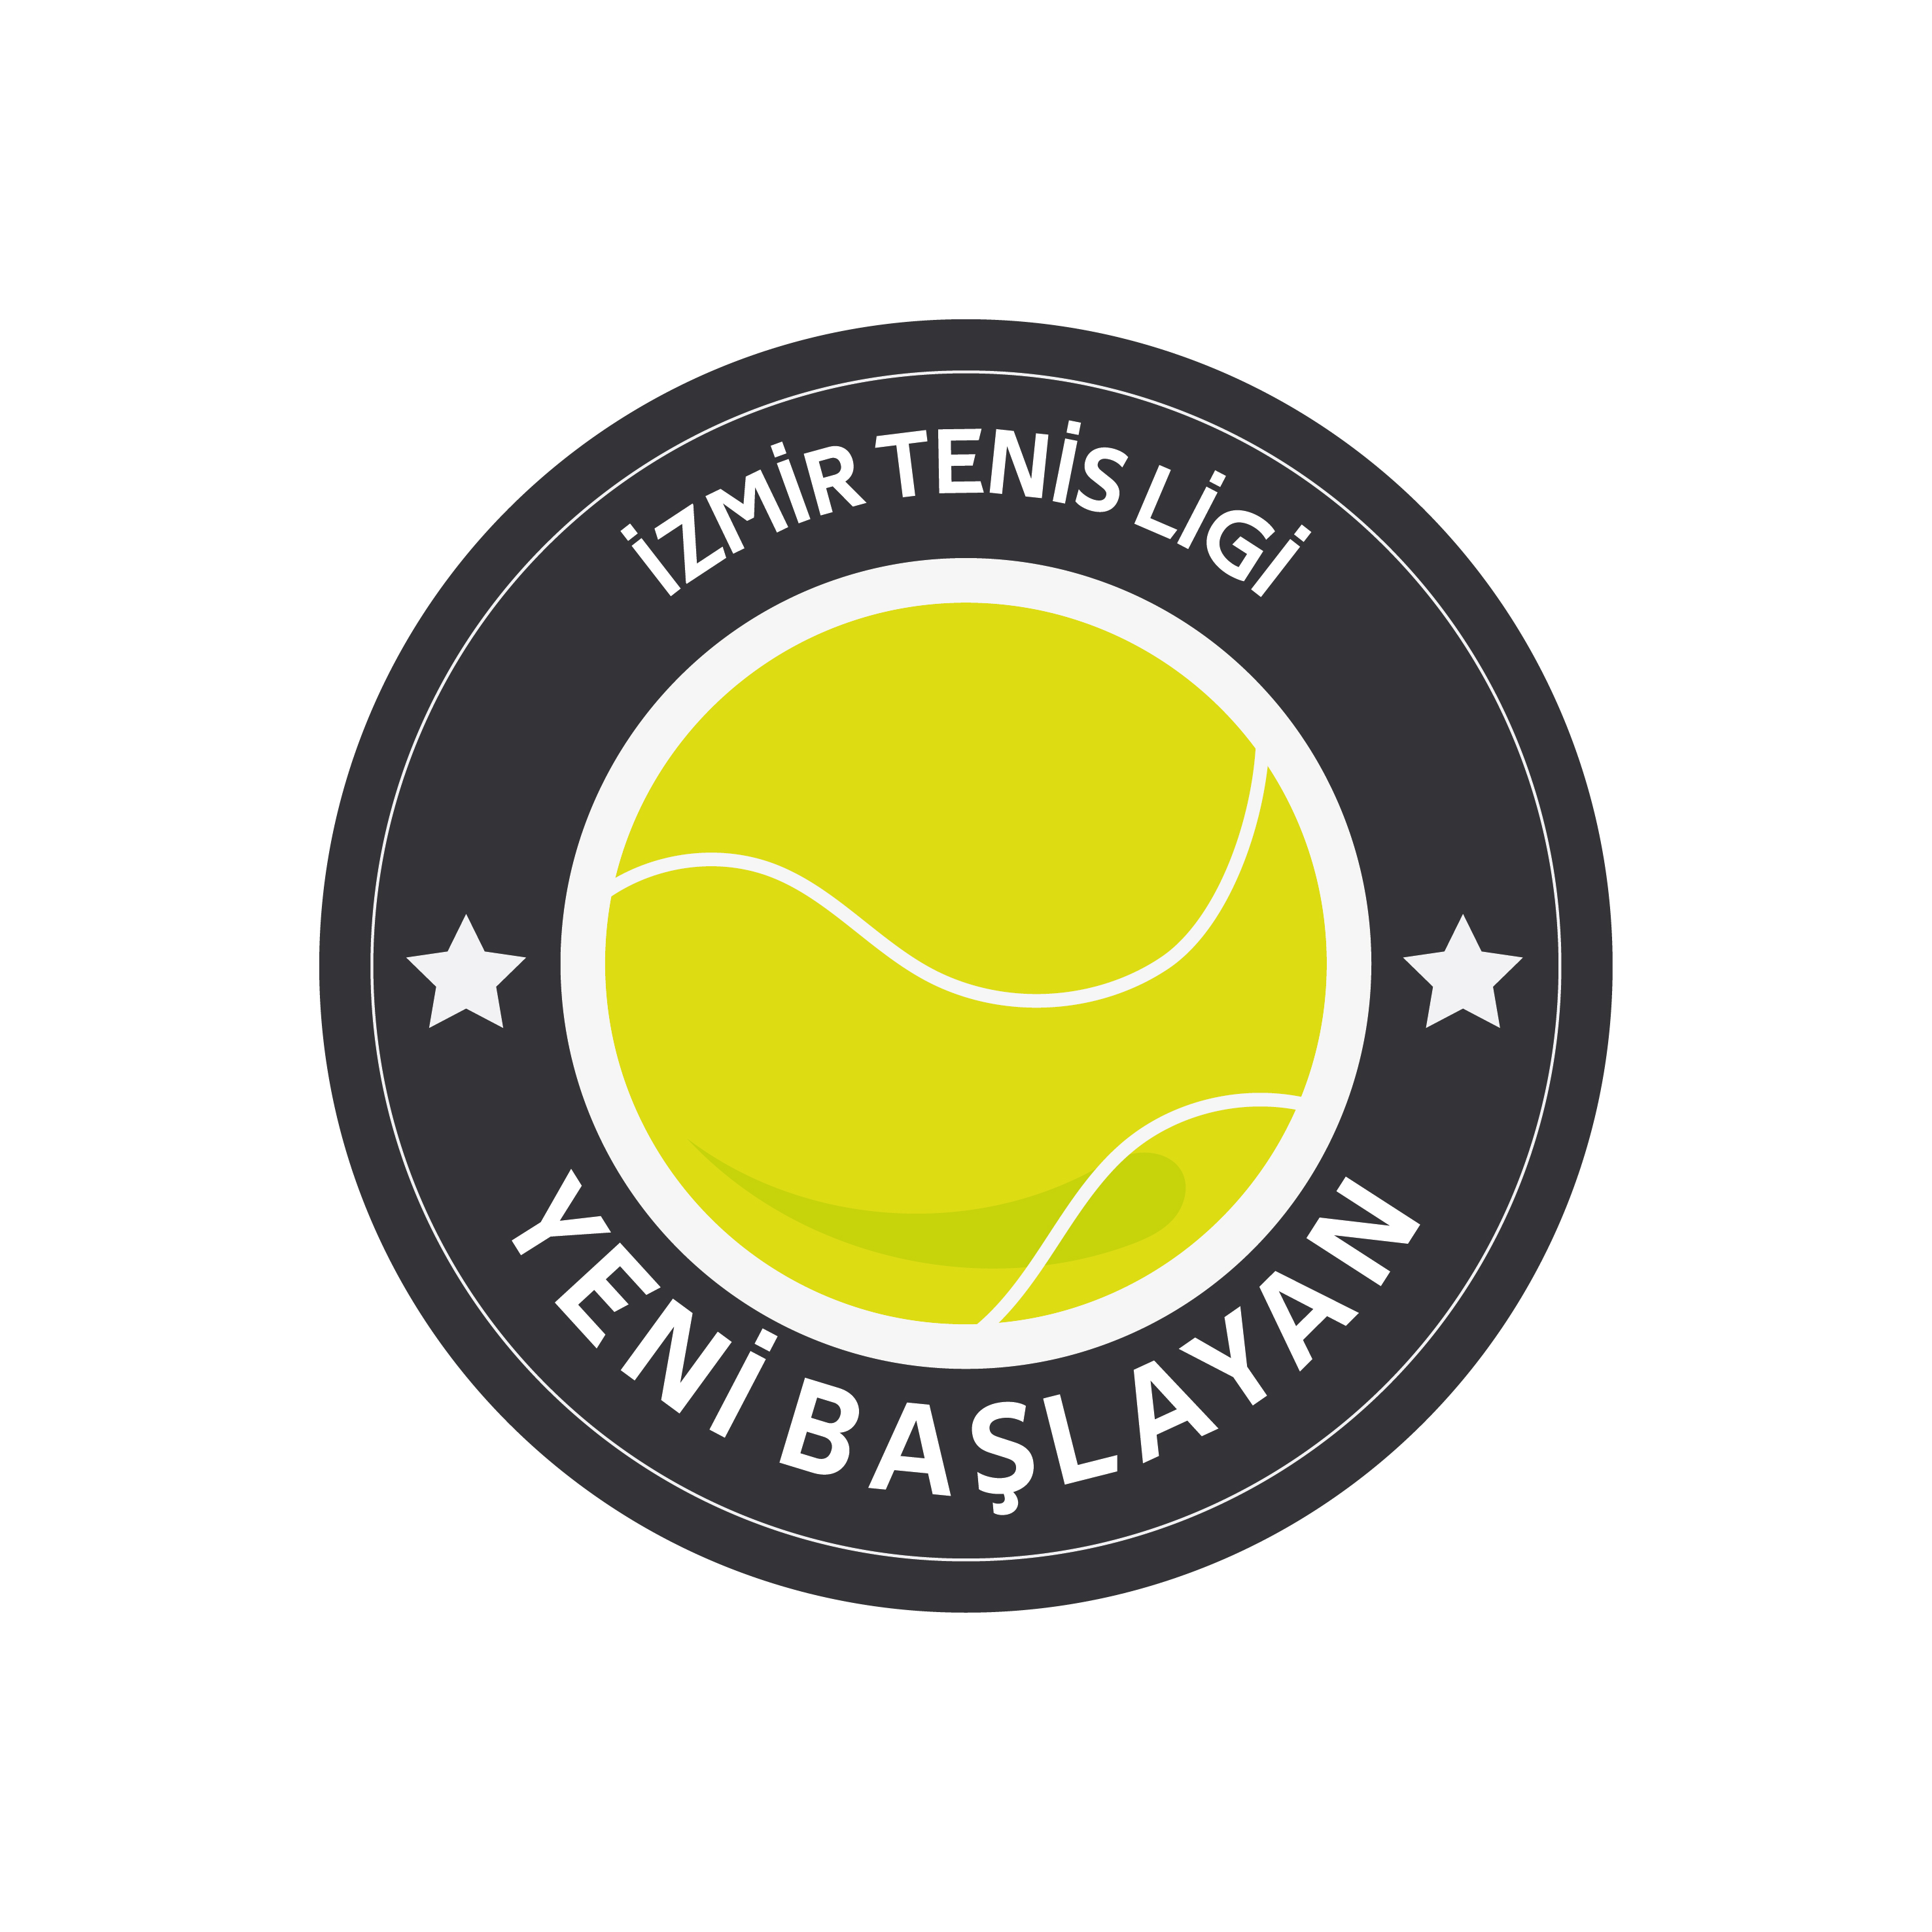 Smyrna Cup Tenis Turnuvası - Yeni Başlayan